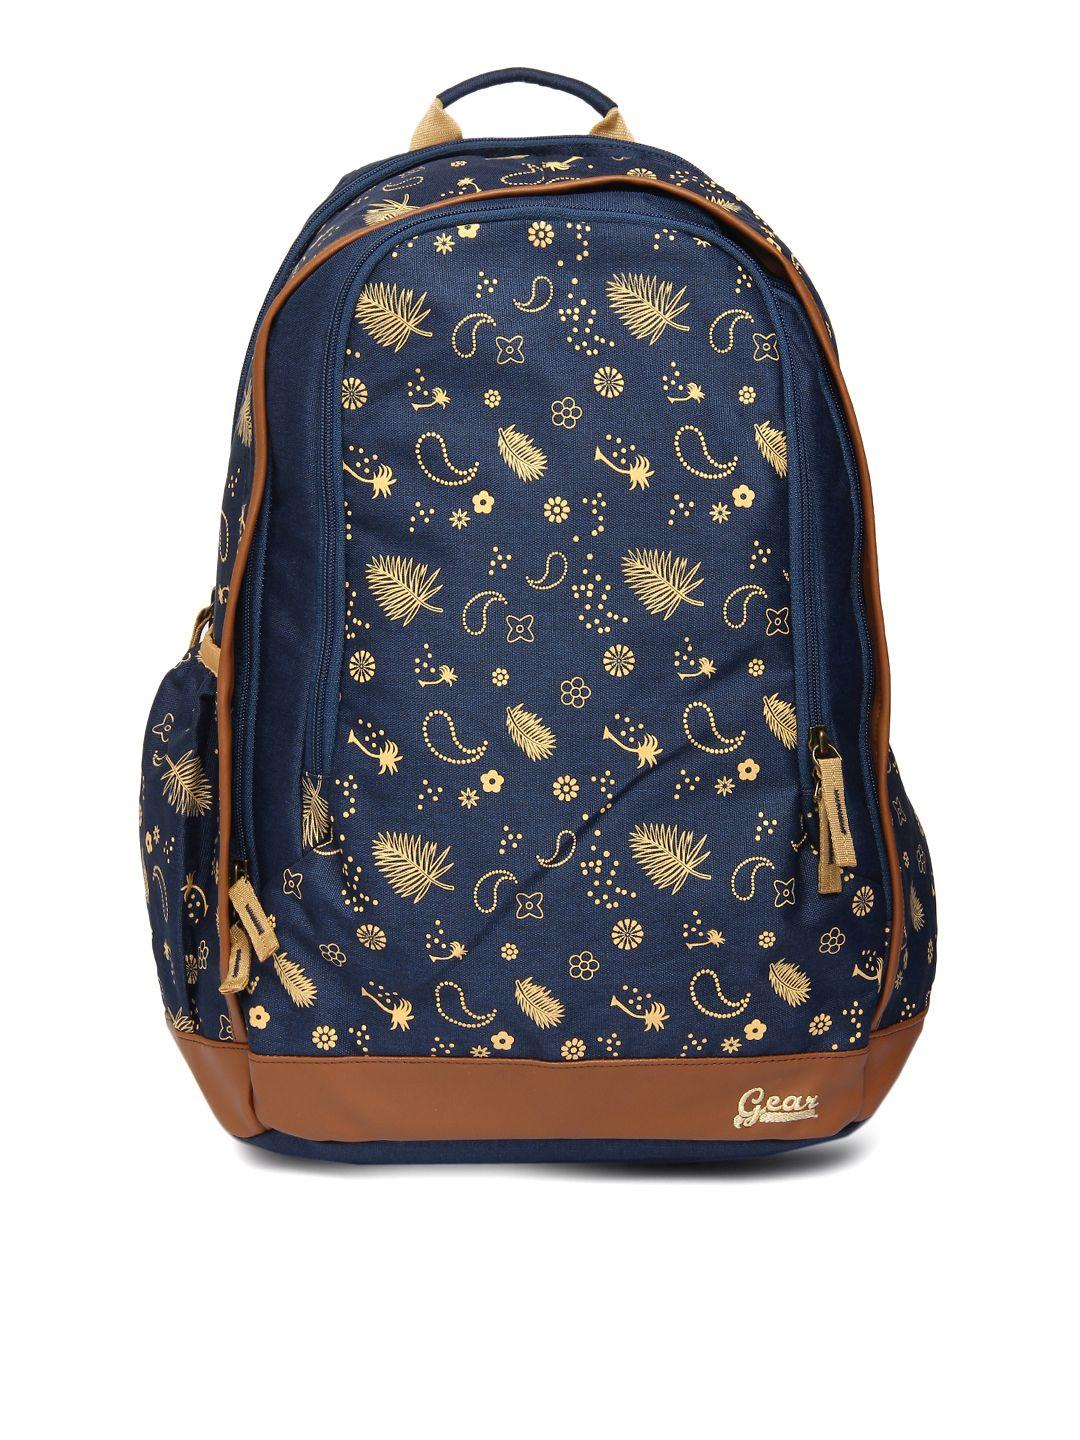 gear unisex navy blue printed backpack